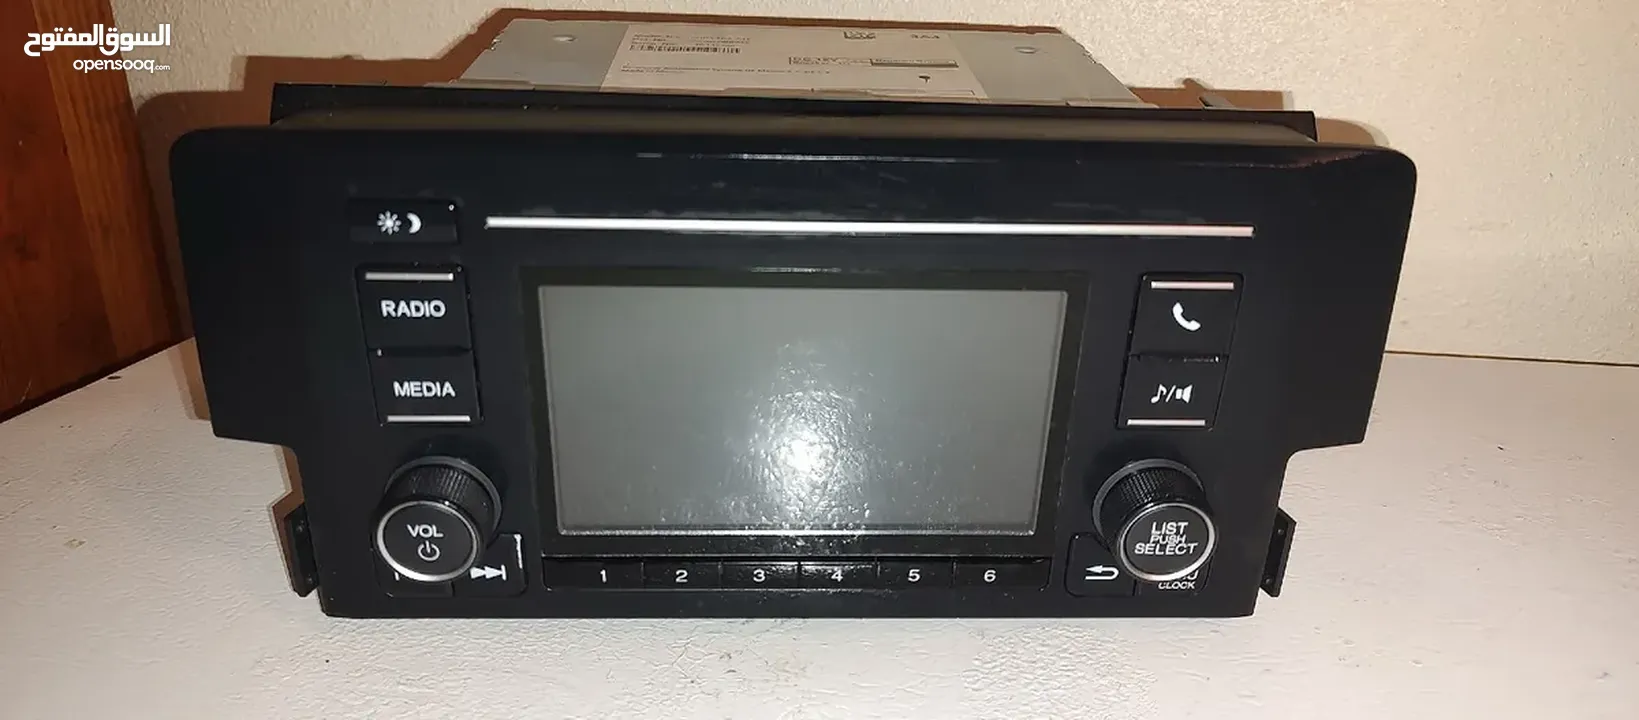 Original stock honda Civic 2019 radio/stereo system